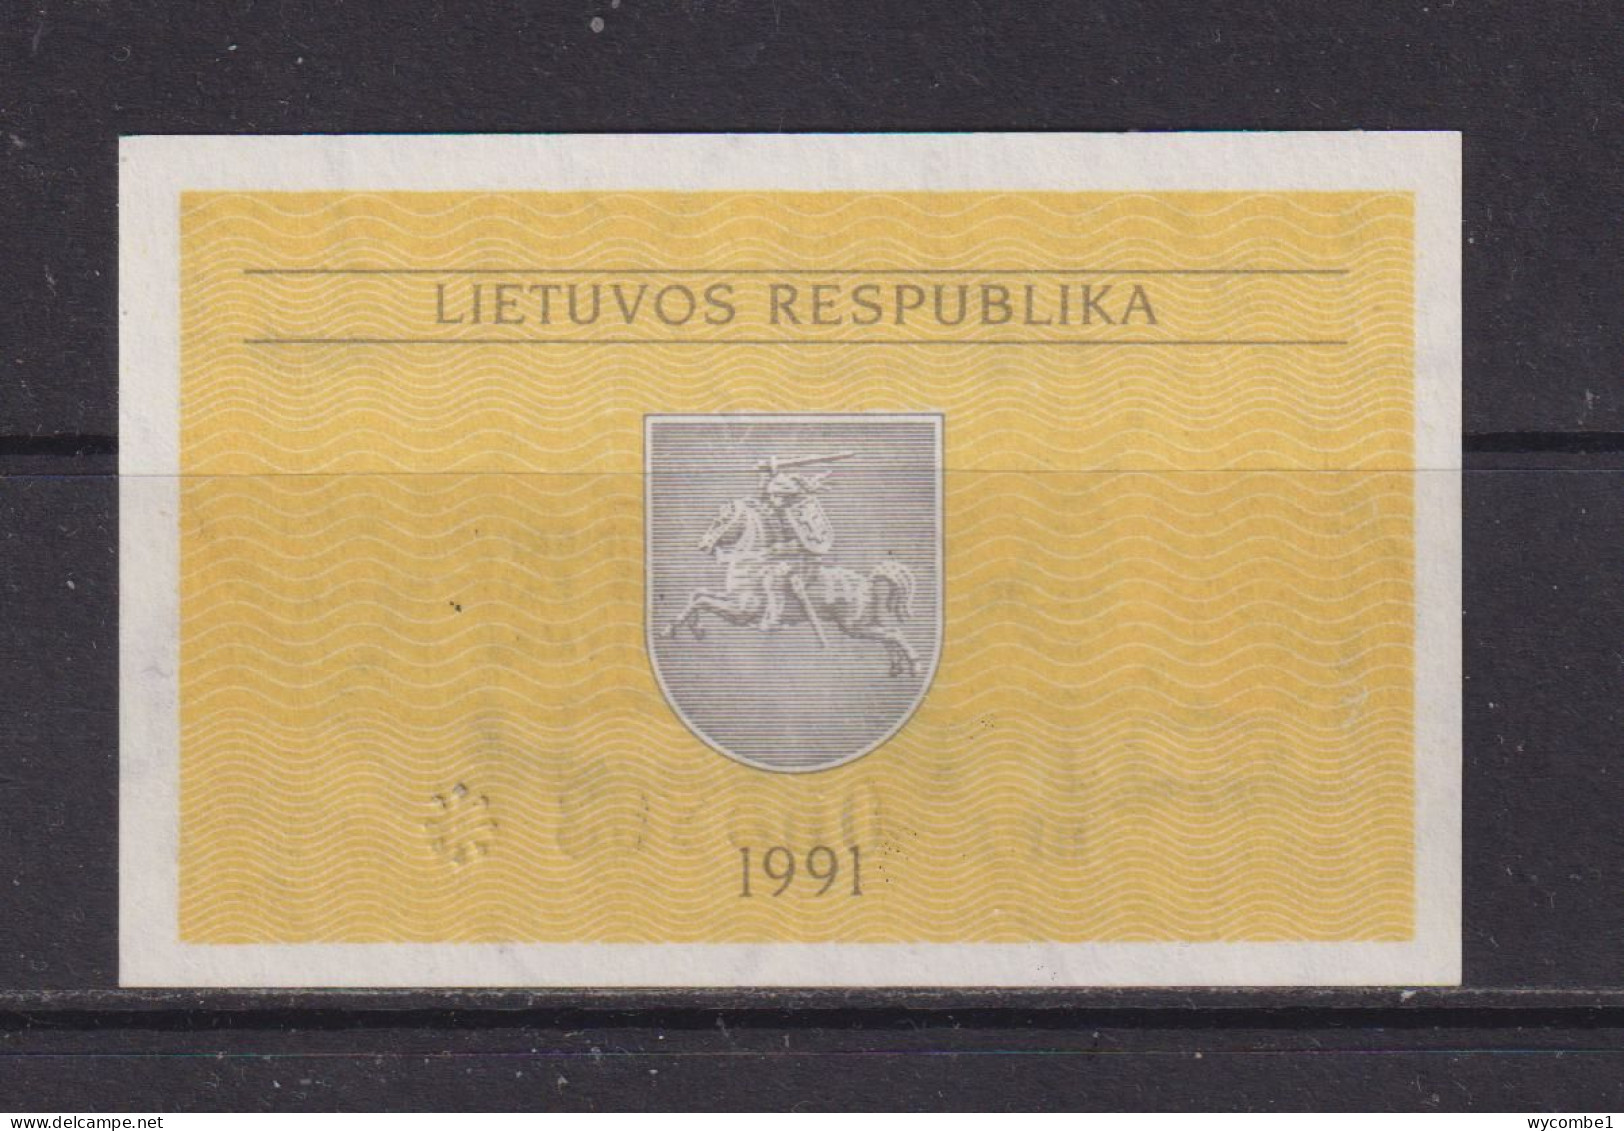 LITHUANIA - 1991 0.50 Talonas UNC Banknote - Lithuania